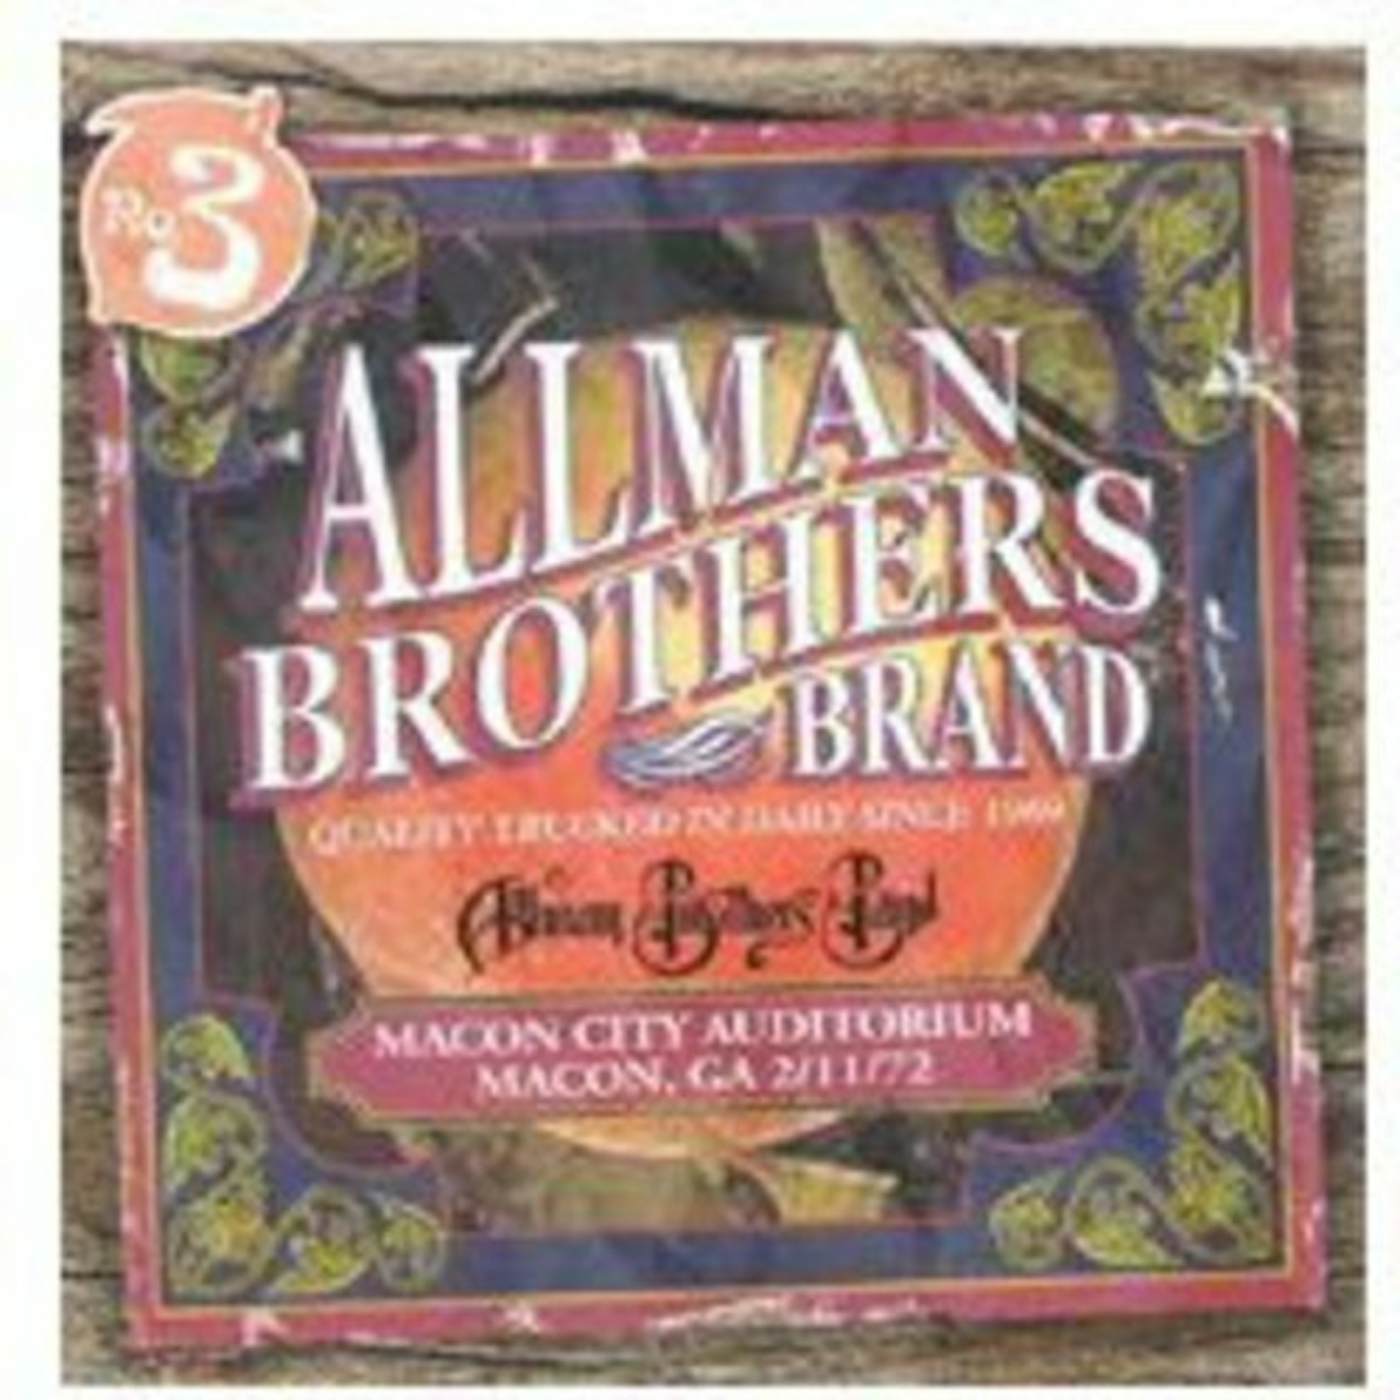 Allman Brothers Band MACON CITY AUDITORIUM 2/11/72 CD